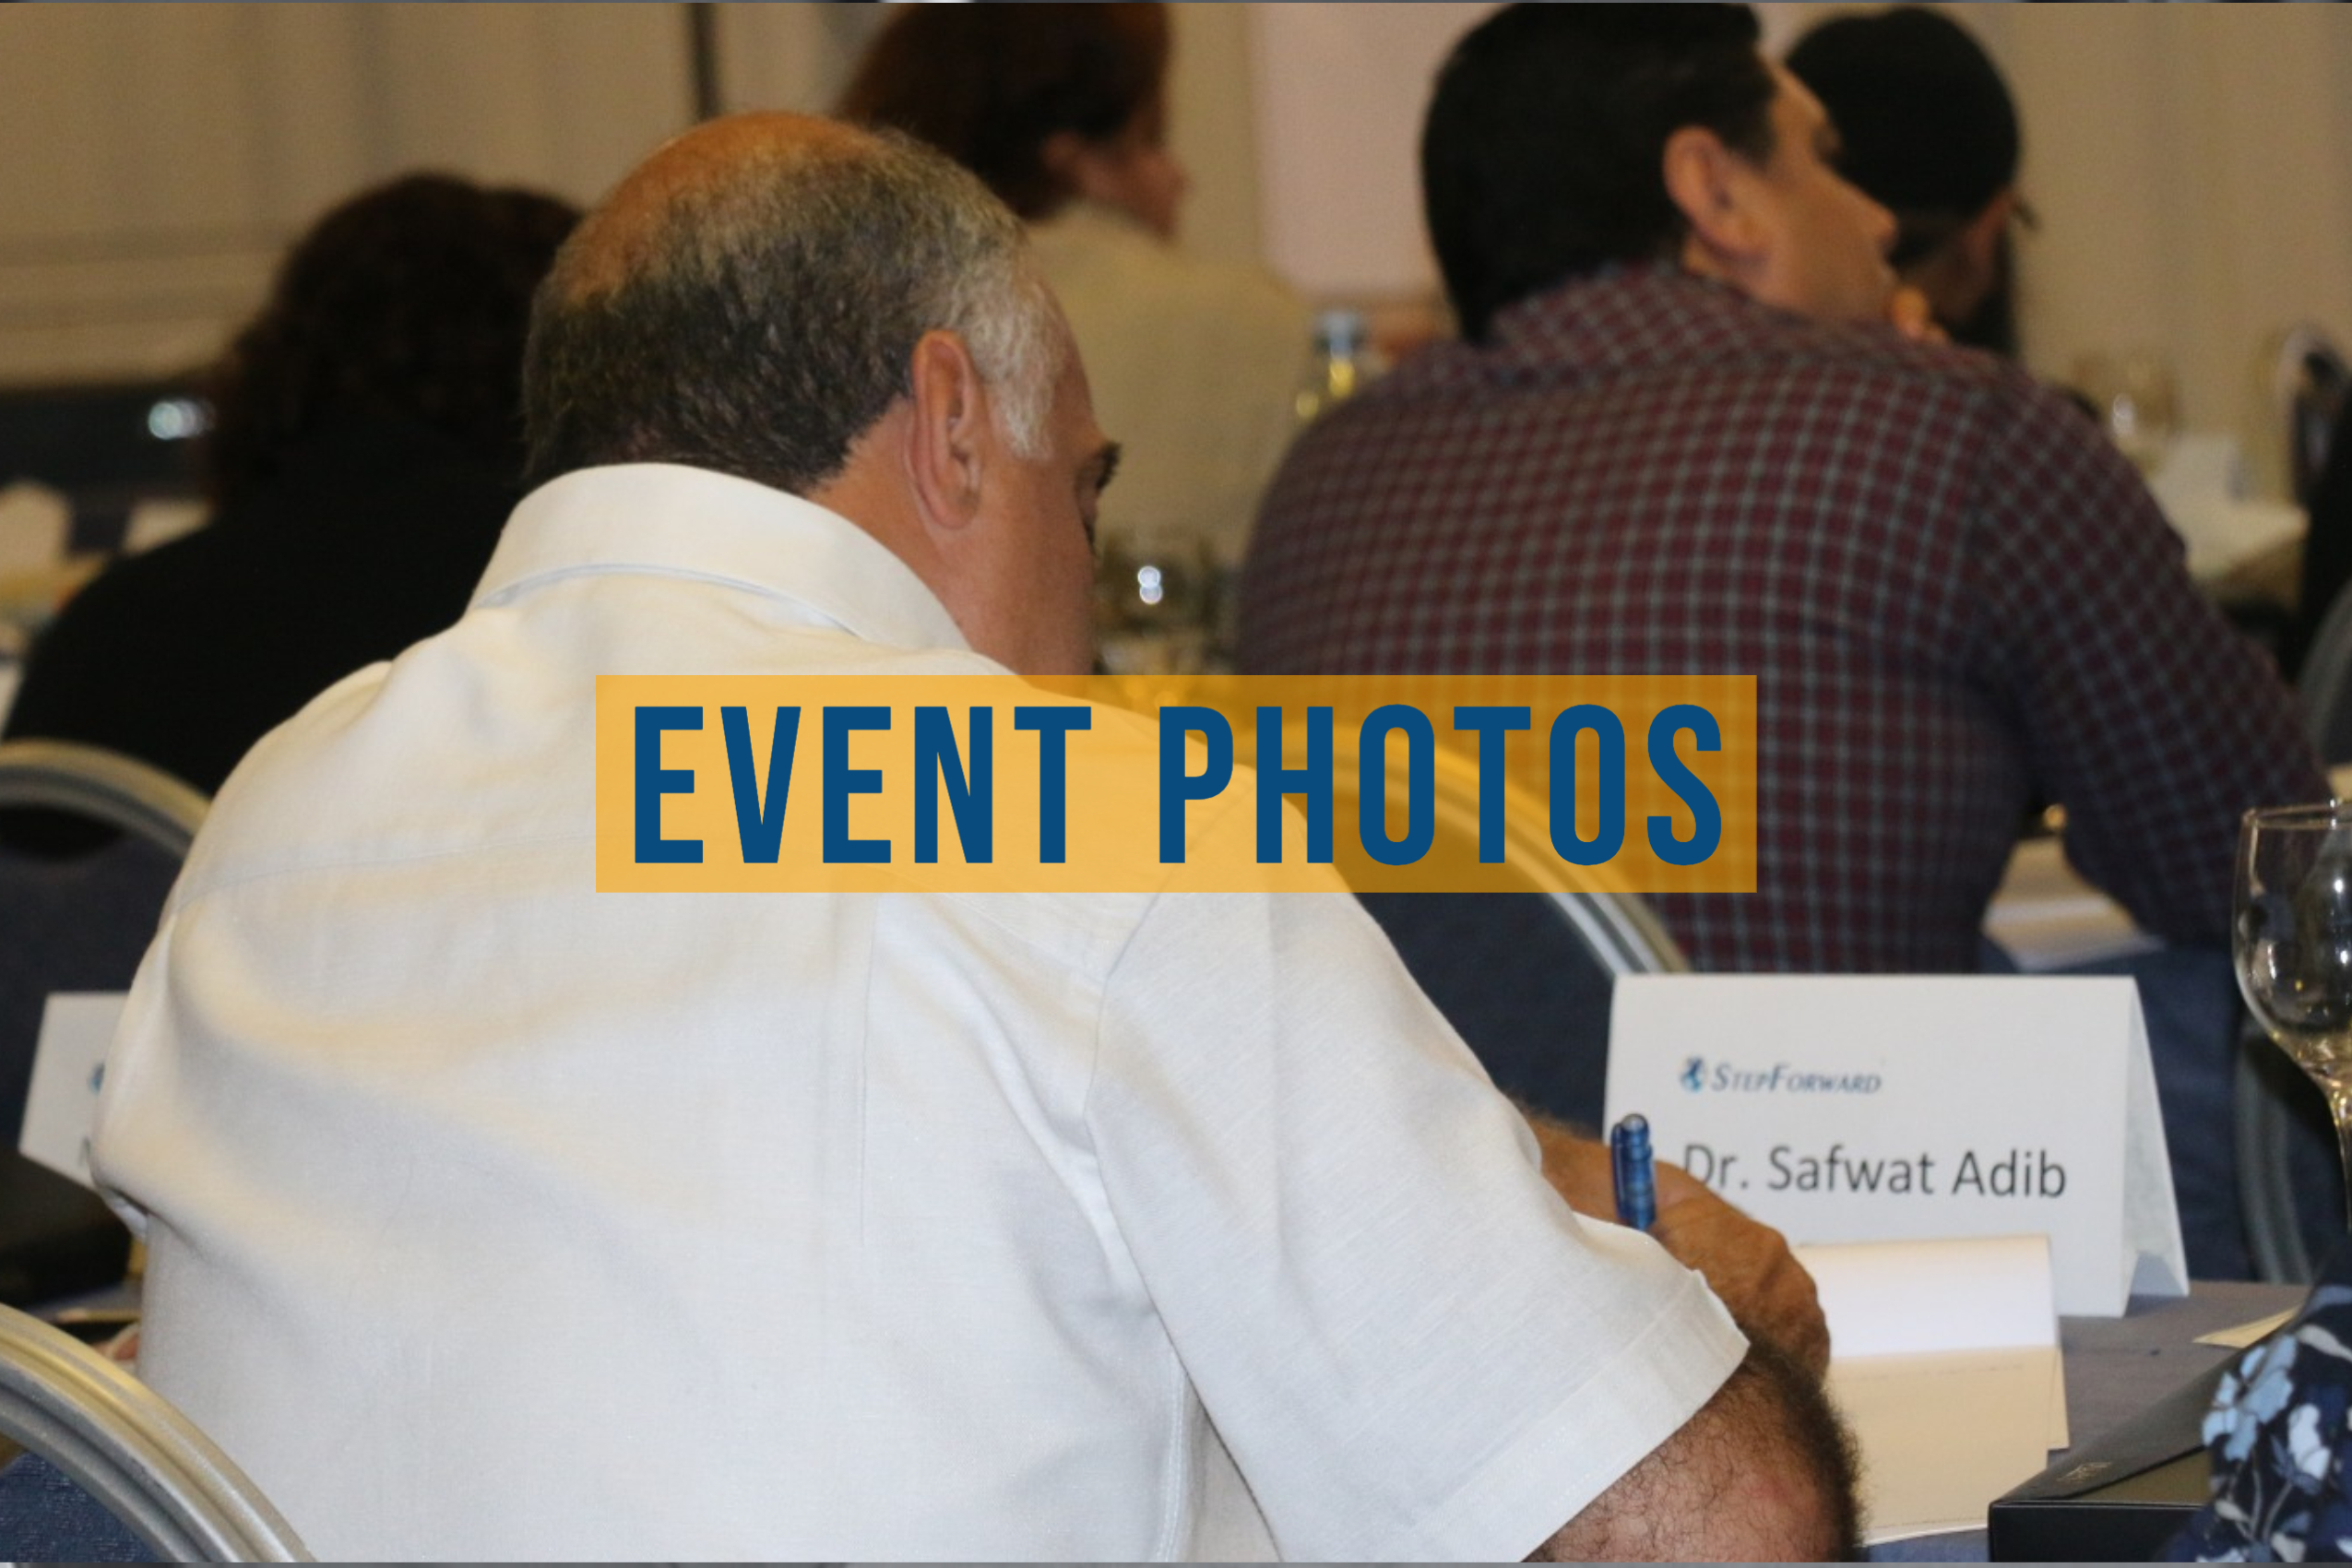 Event, photos, leadership seminars